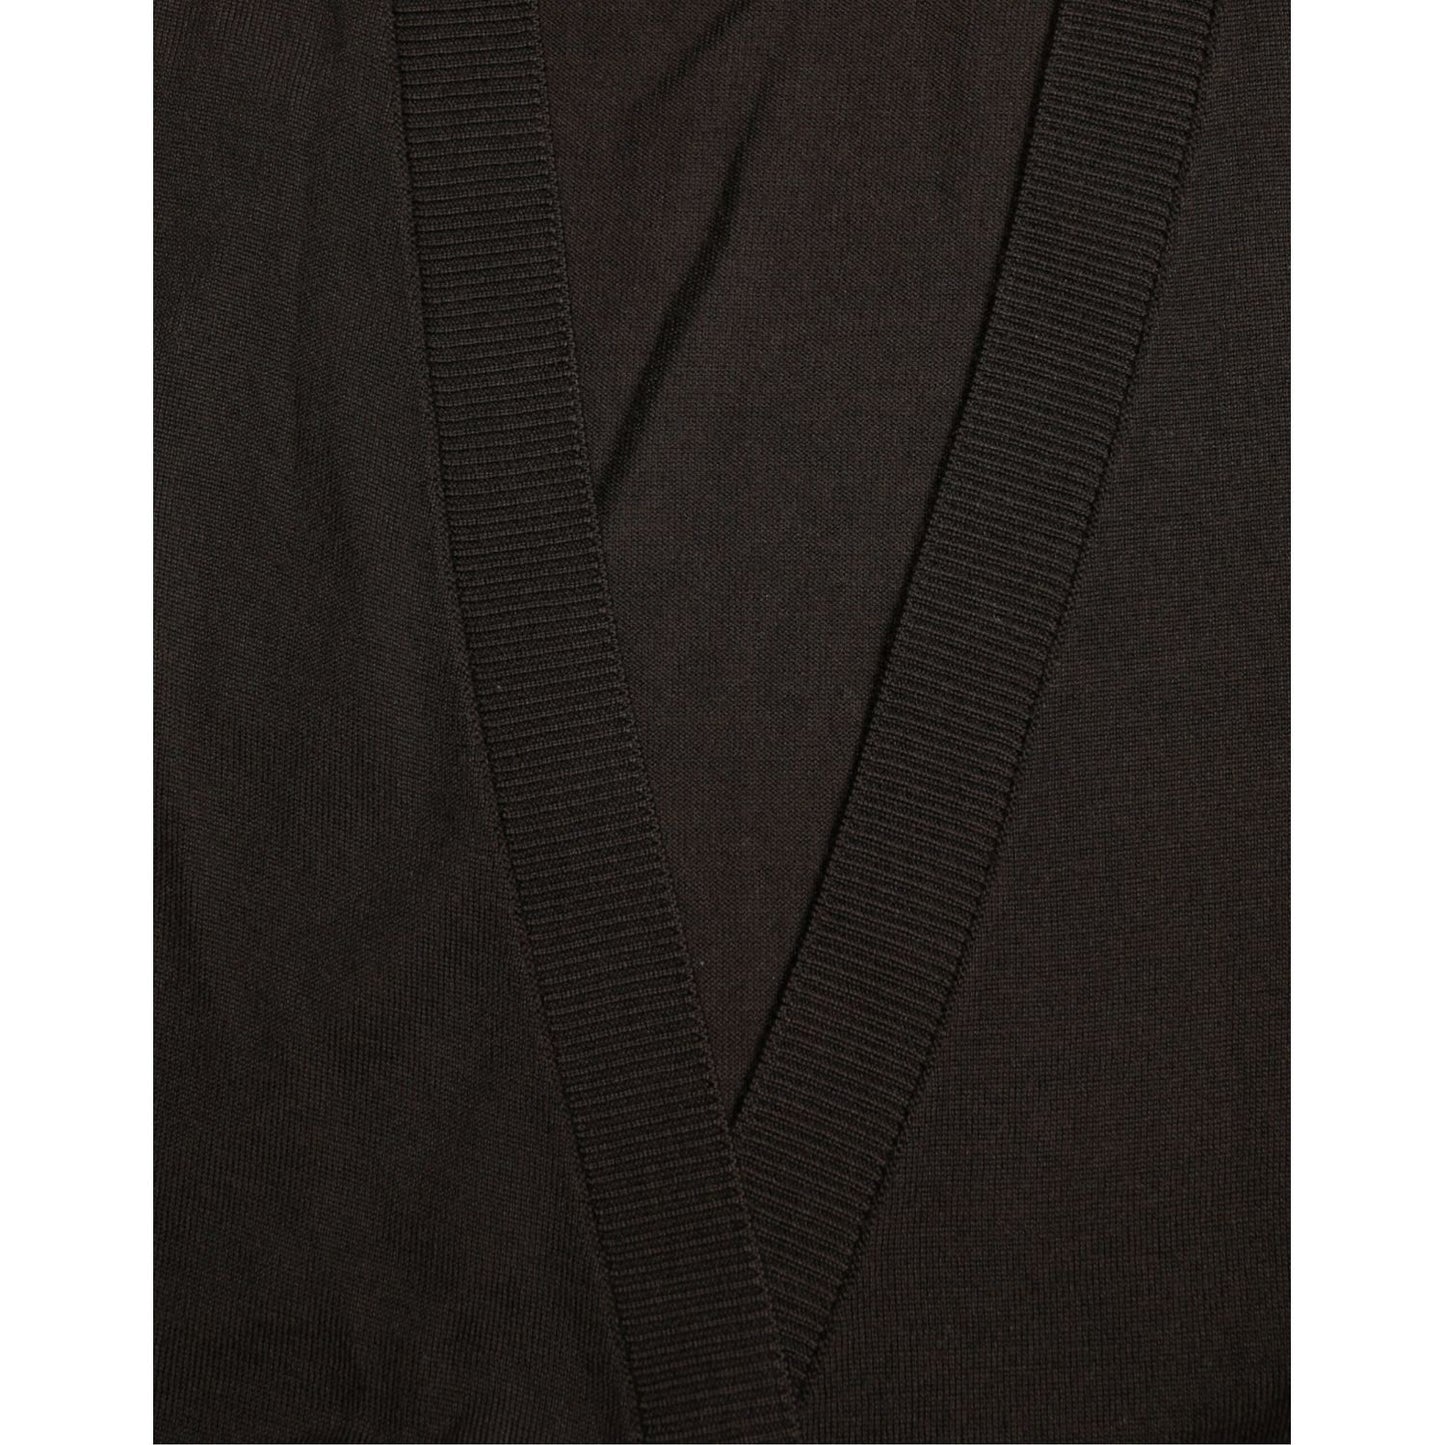 Dolce & Gabbana Elegant Black Virgin Wool Cardigan black-wool-v-neck-crossed-cardigan-sweater-1